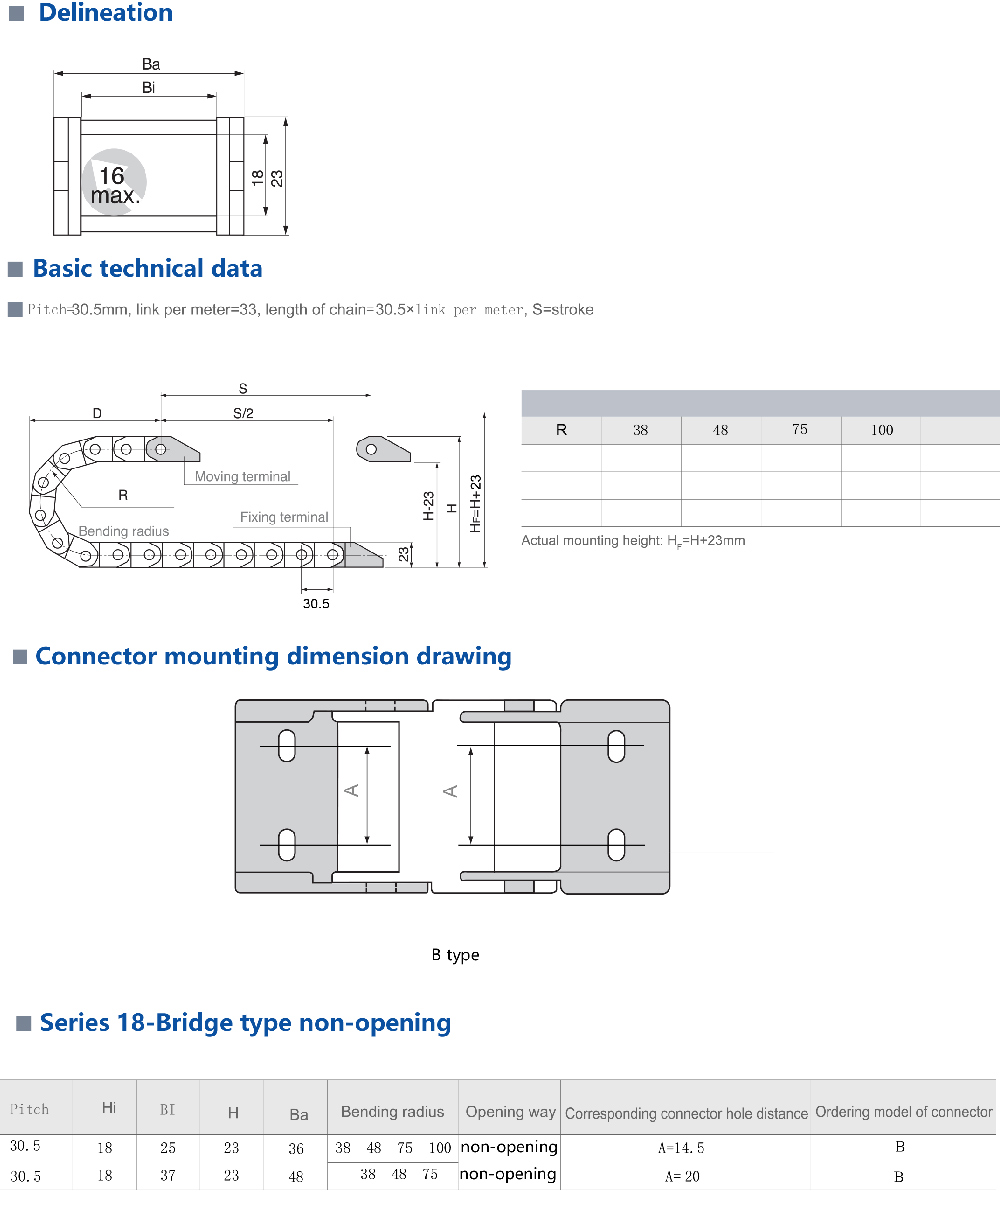 Series 18-Bridge type non-opening